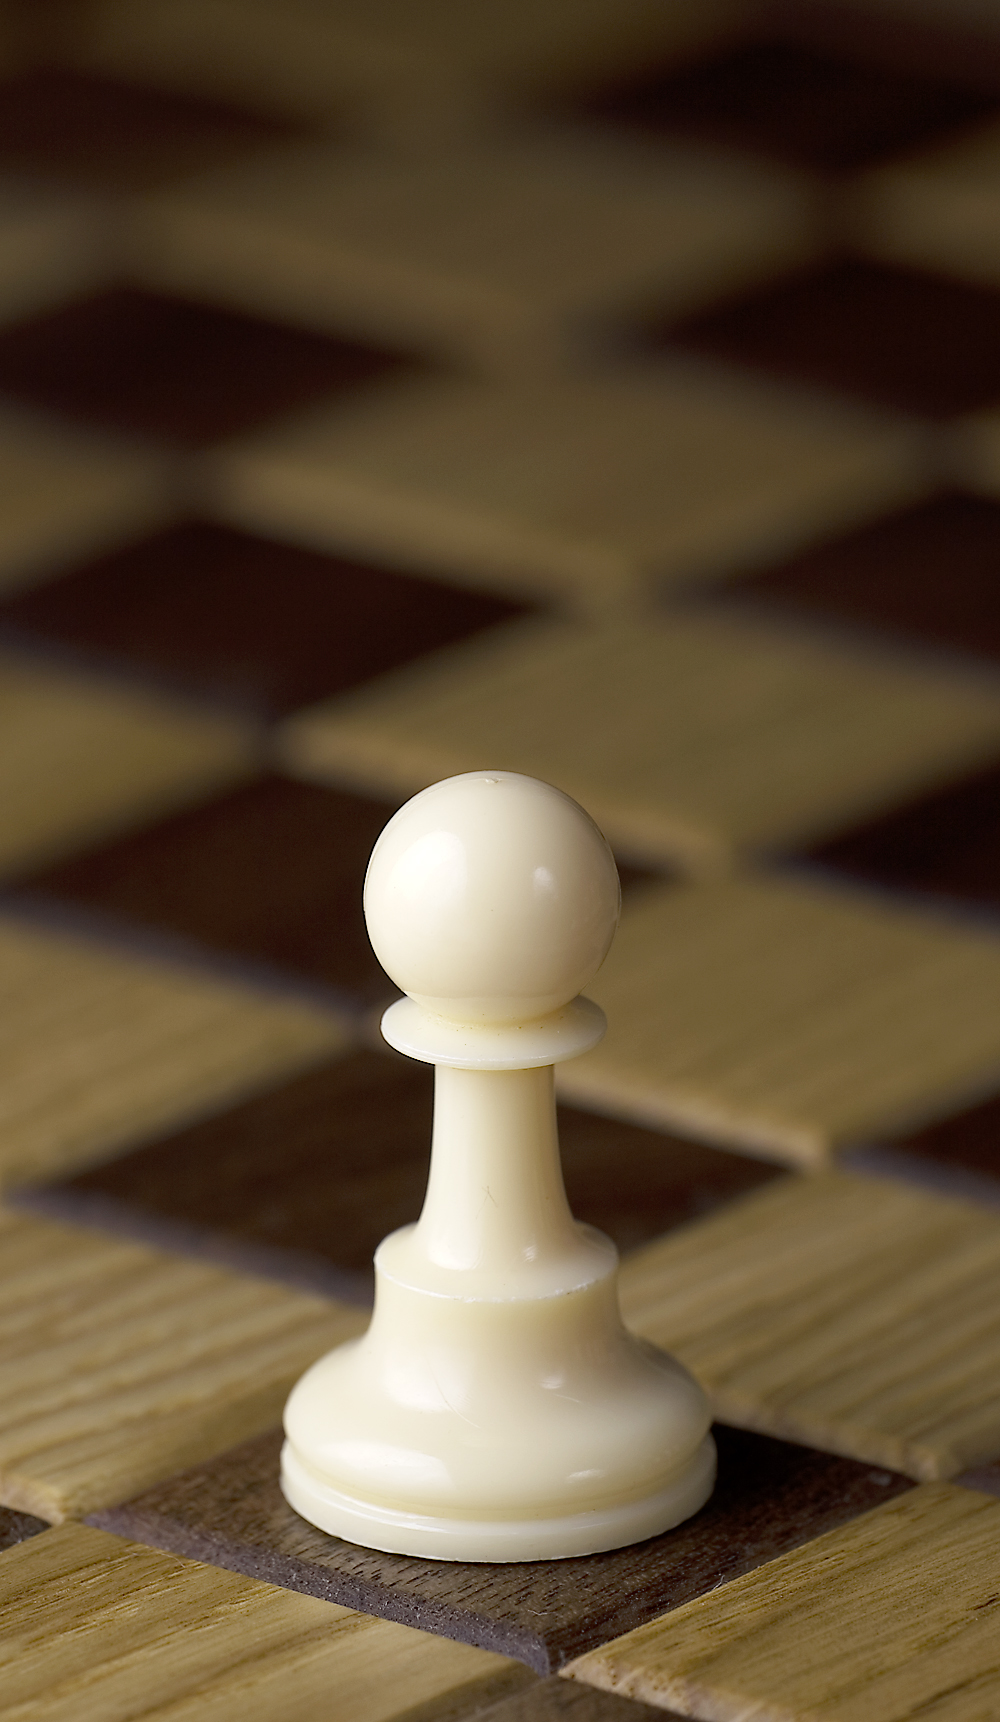 http://upload.wikimedia.org/wikipedia/commons/e/ed/Chess_piece_-_White_pawn.JPG